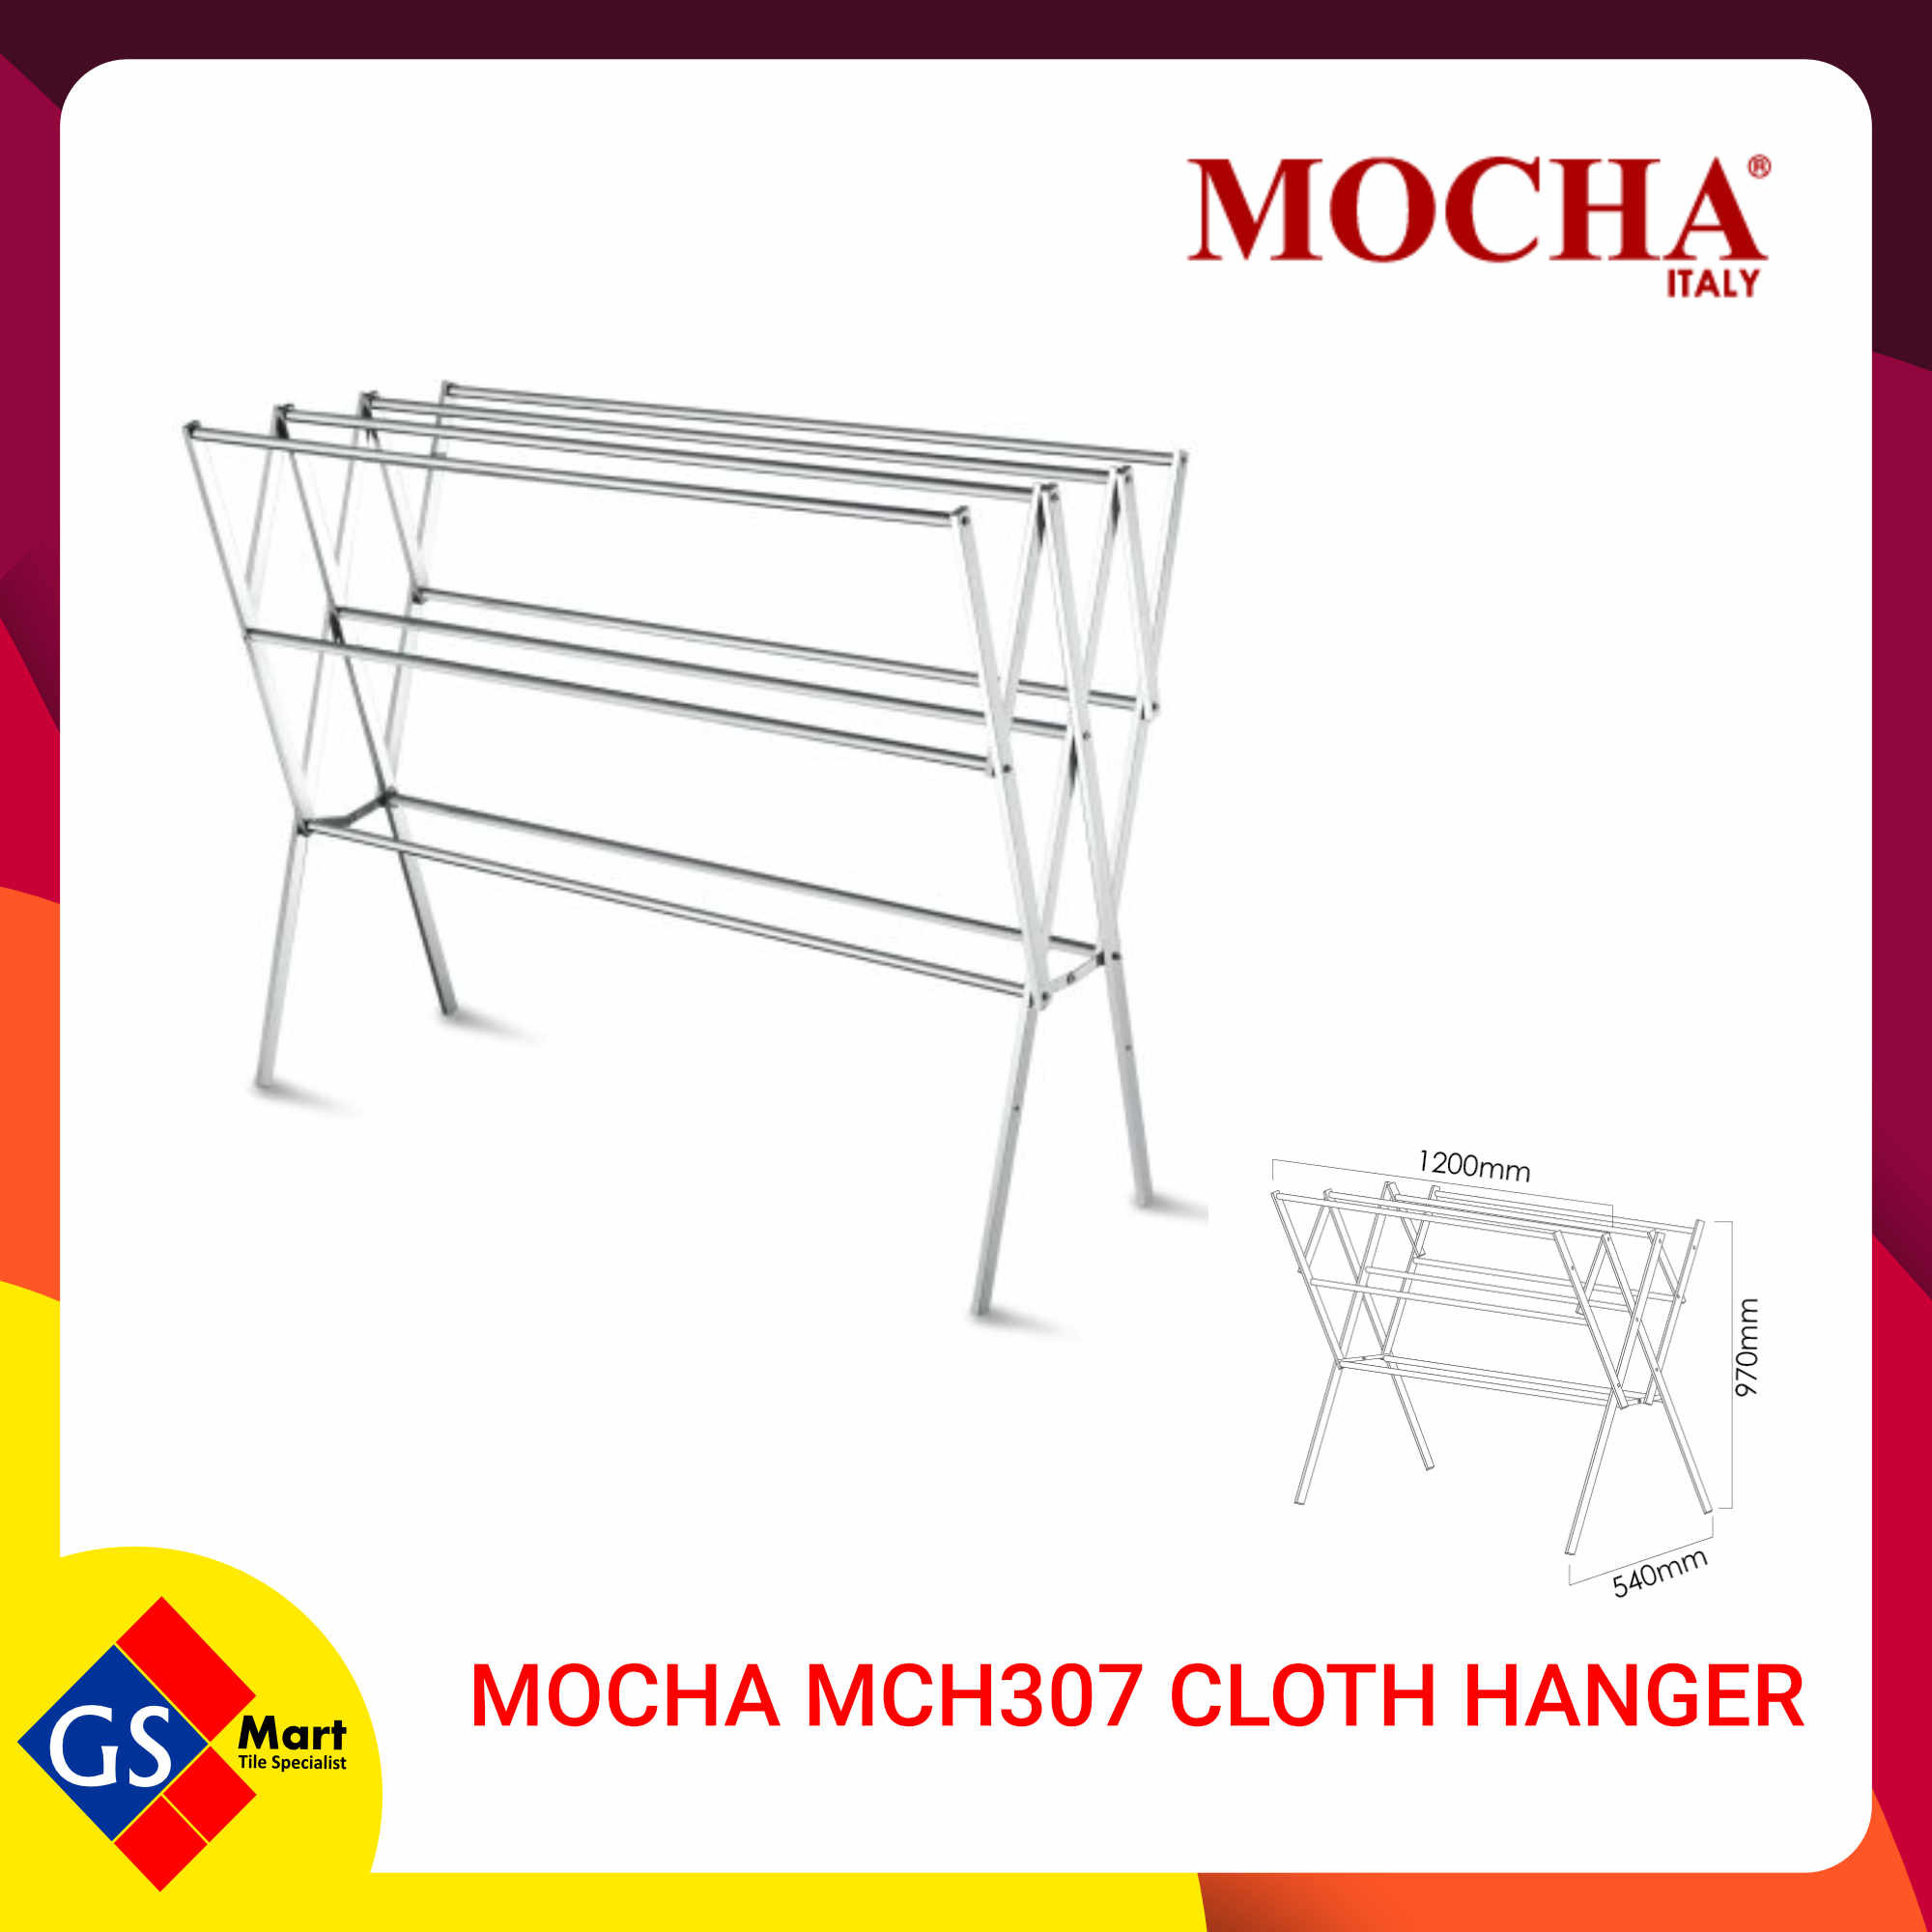 MOCHA MCH307 CLOTH HANGER